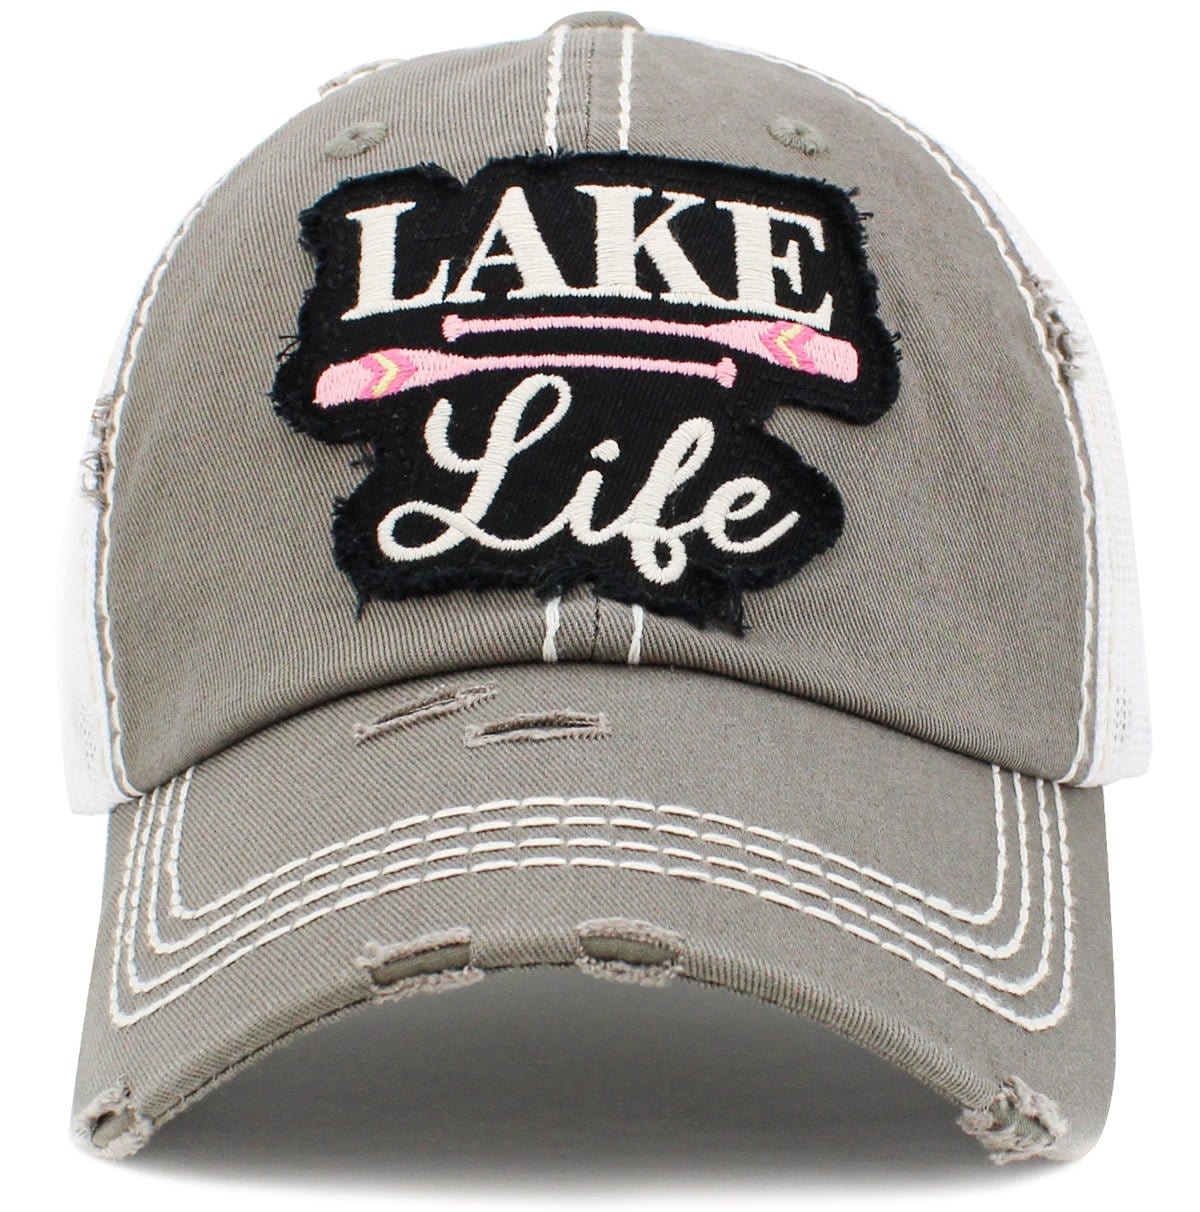 KBV1428 "Lake Life" Vintage Distressed Cotton Cap - MiMi Wholesale